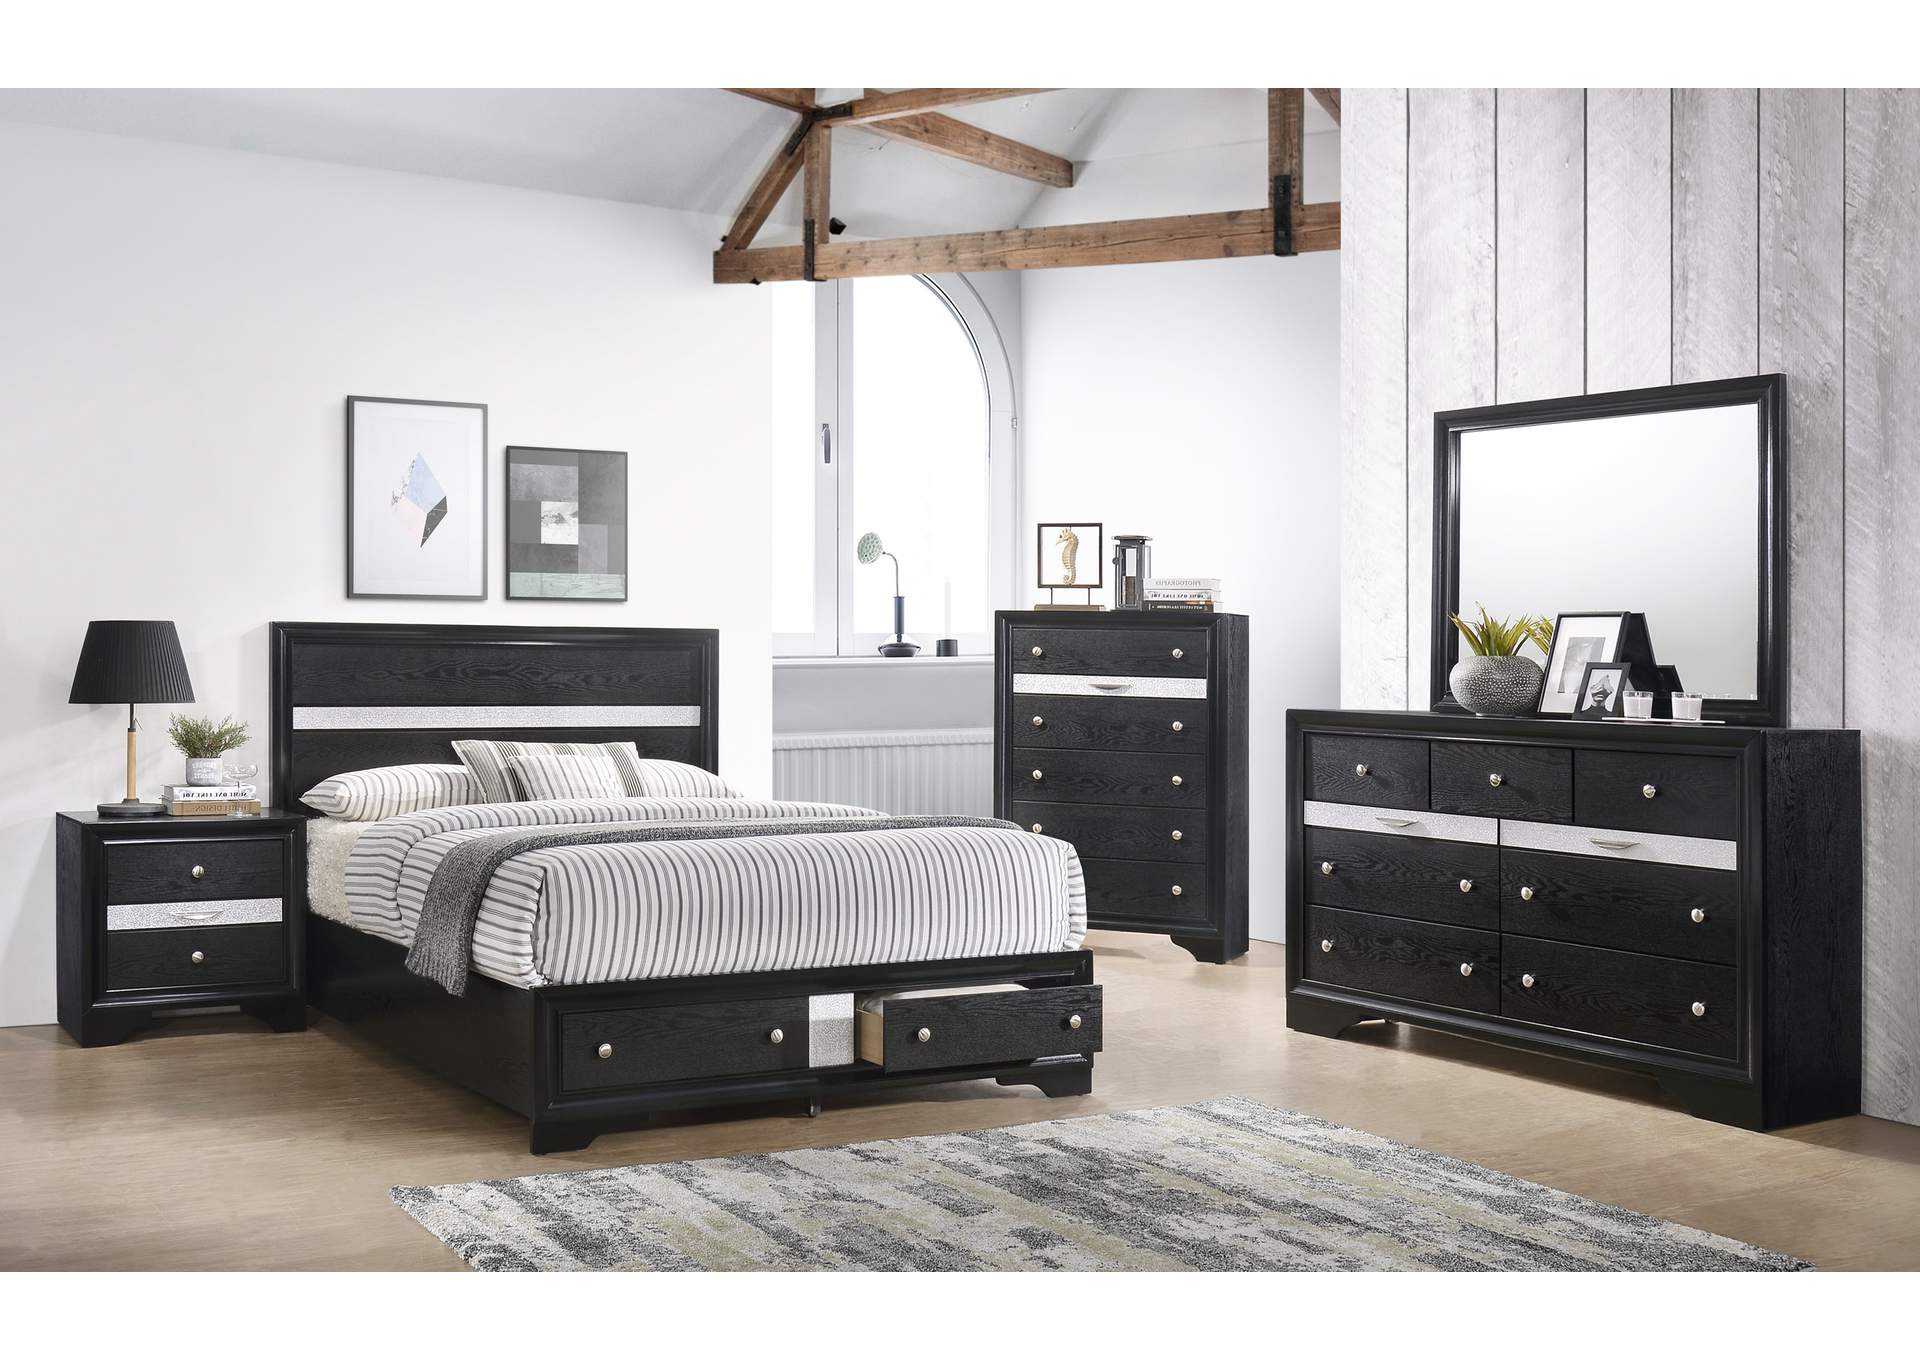 Regata Black Queen Bed W/ Dresser, Mirror, Nightstand